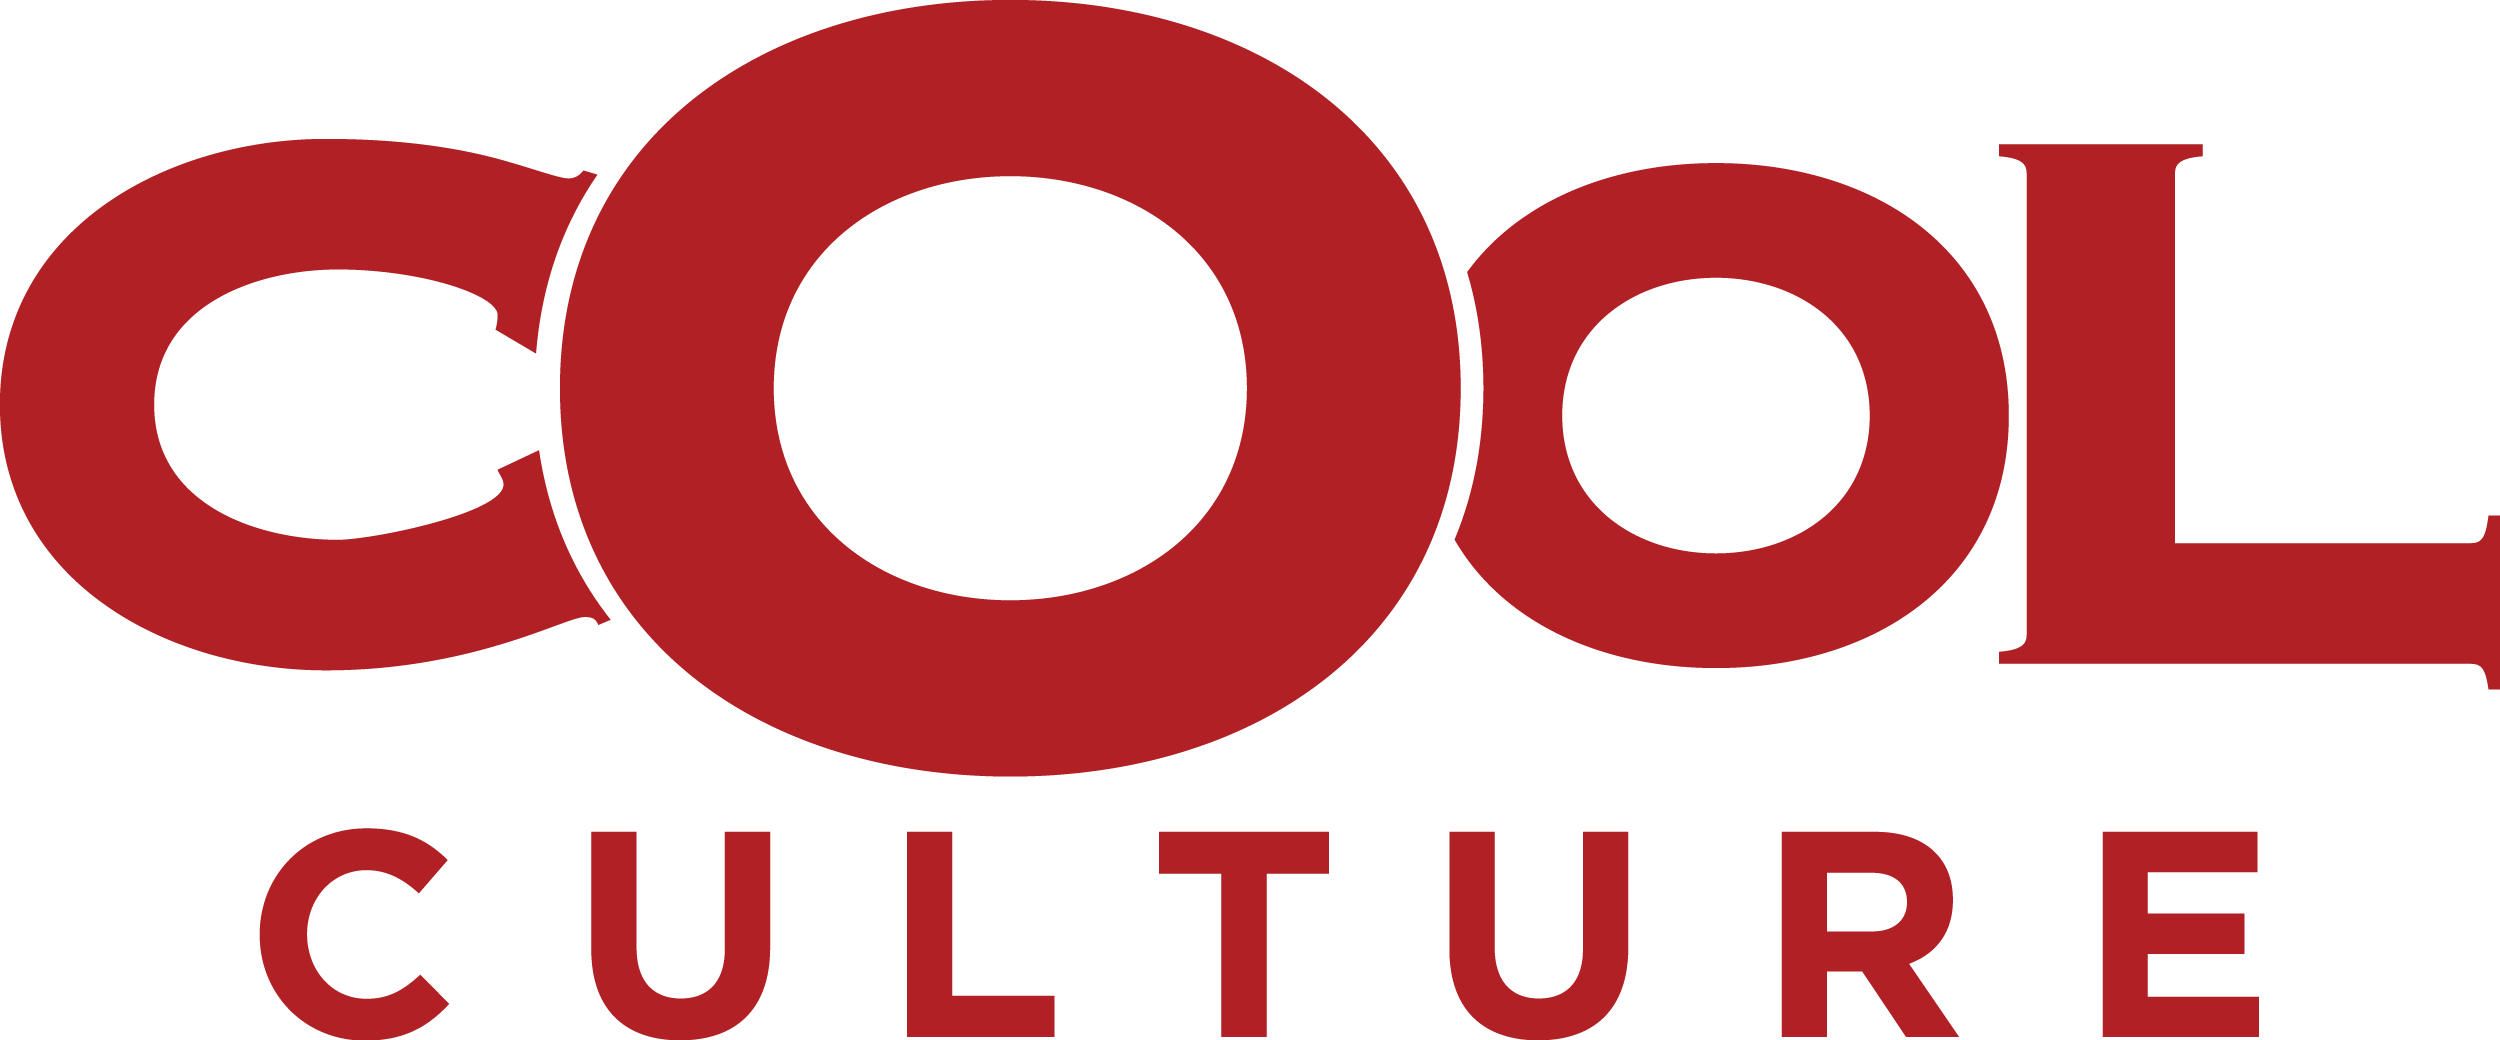 cool culture logo